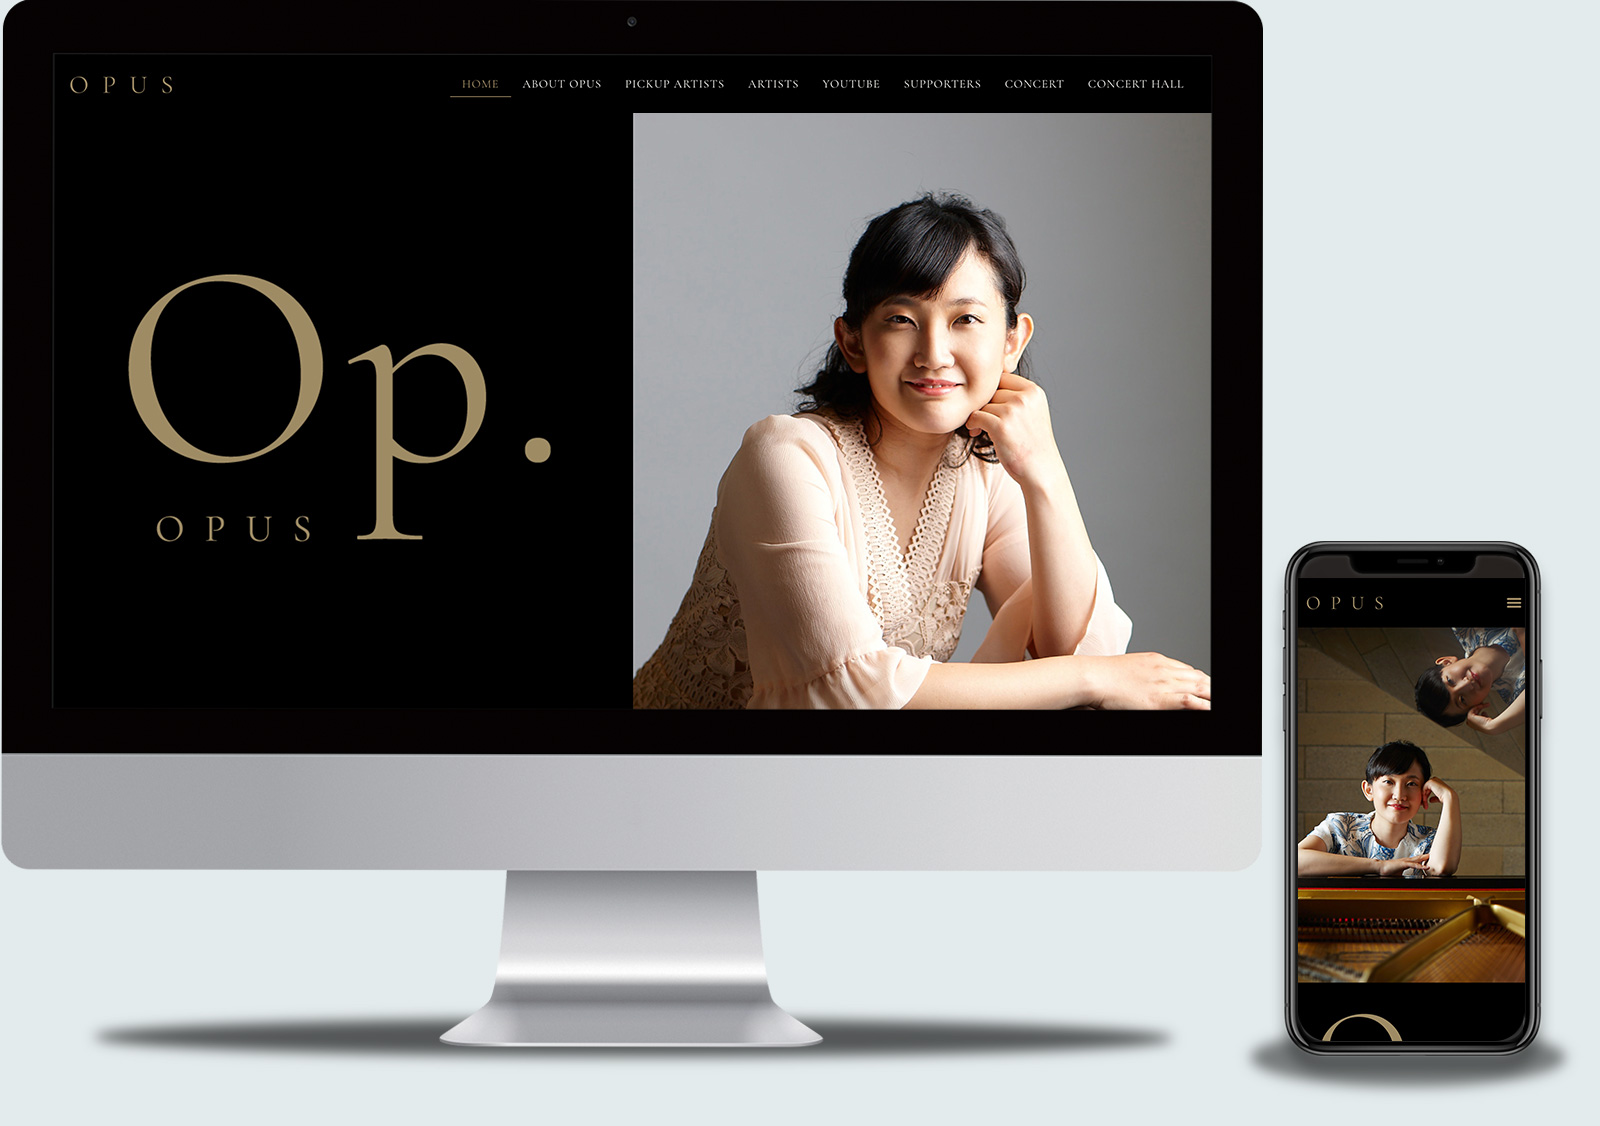 OPUS WEBサイト